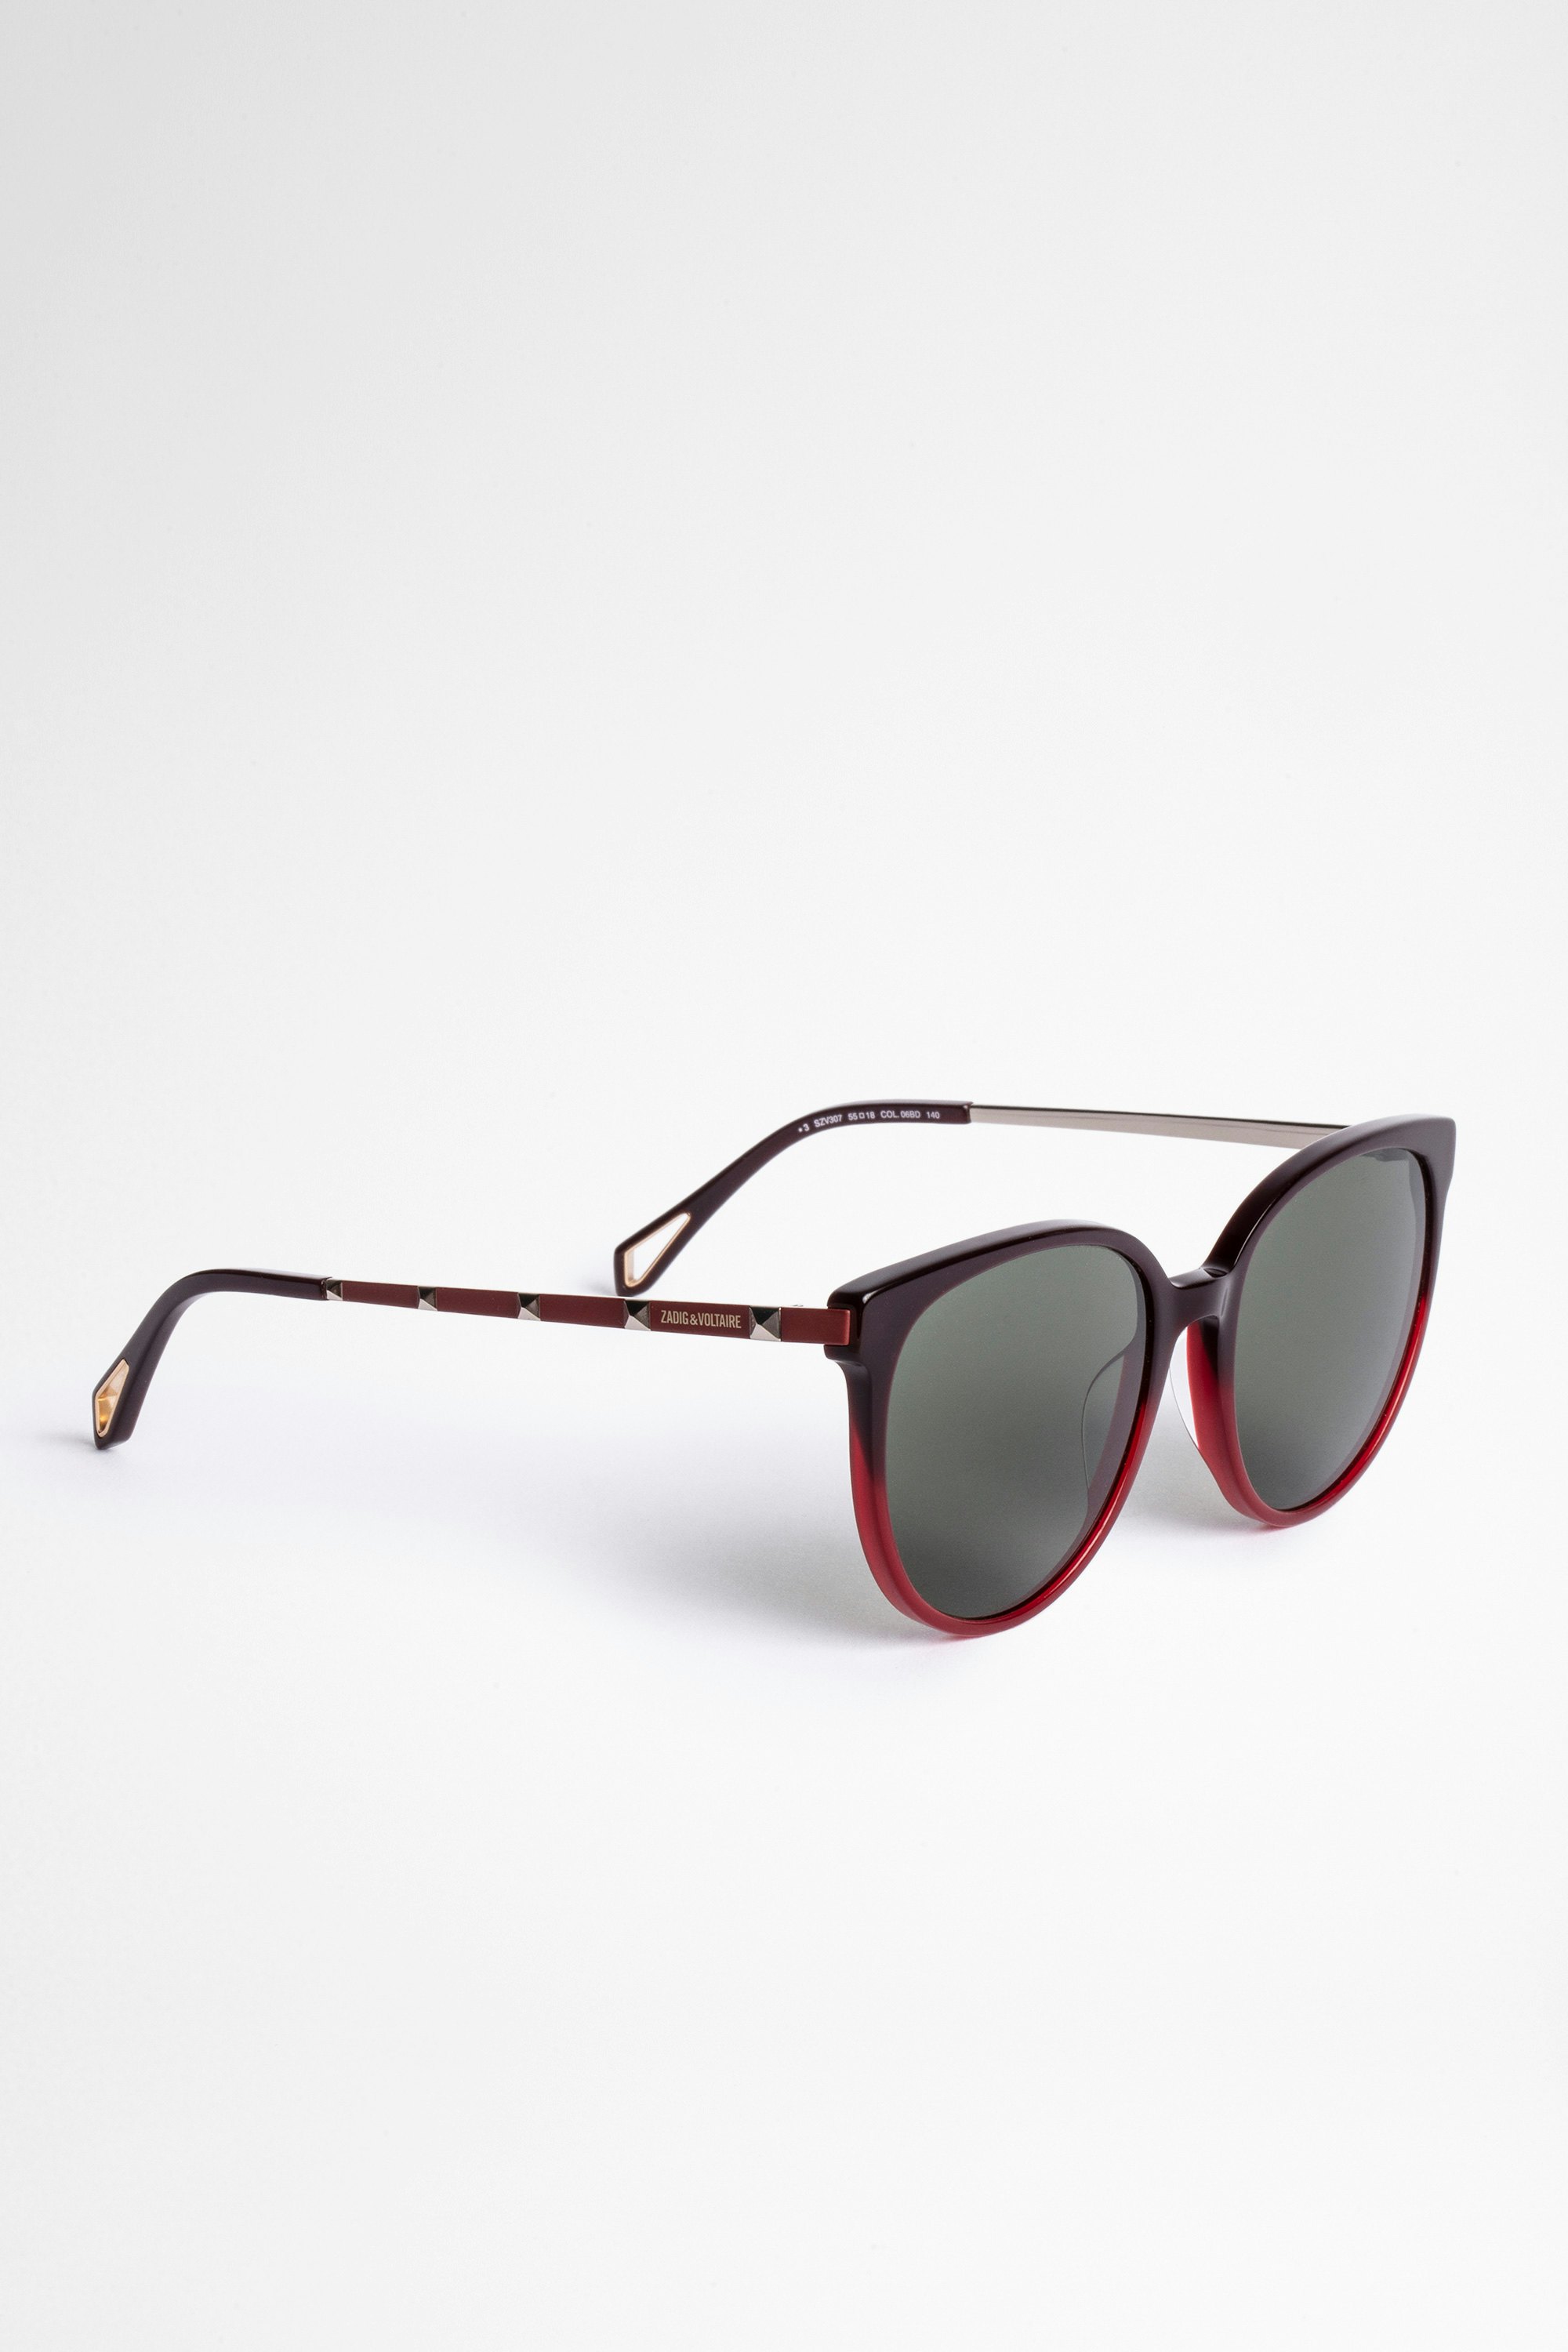 Studs Sunglasses Unisex bio-acetate sunglasses in red with green lenses